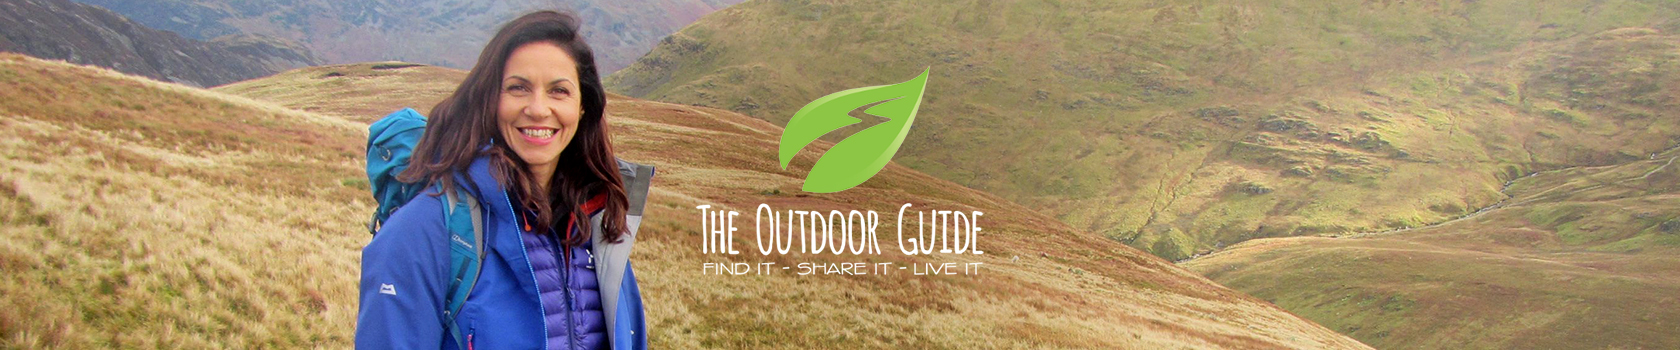 The Outdoor Guide - an image of Julia Bradbury enjoying outdoors